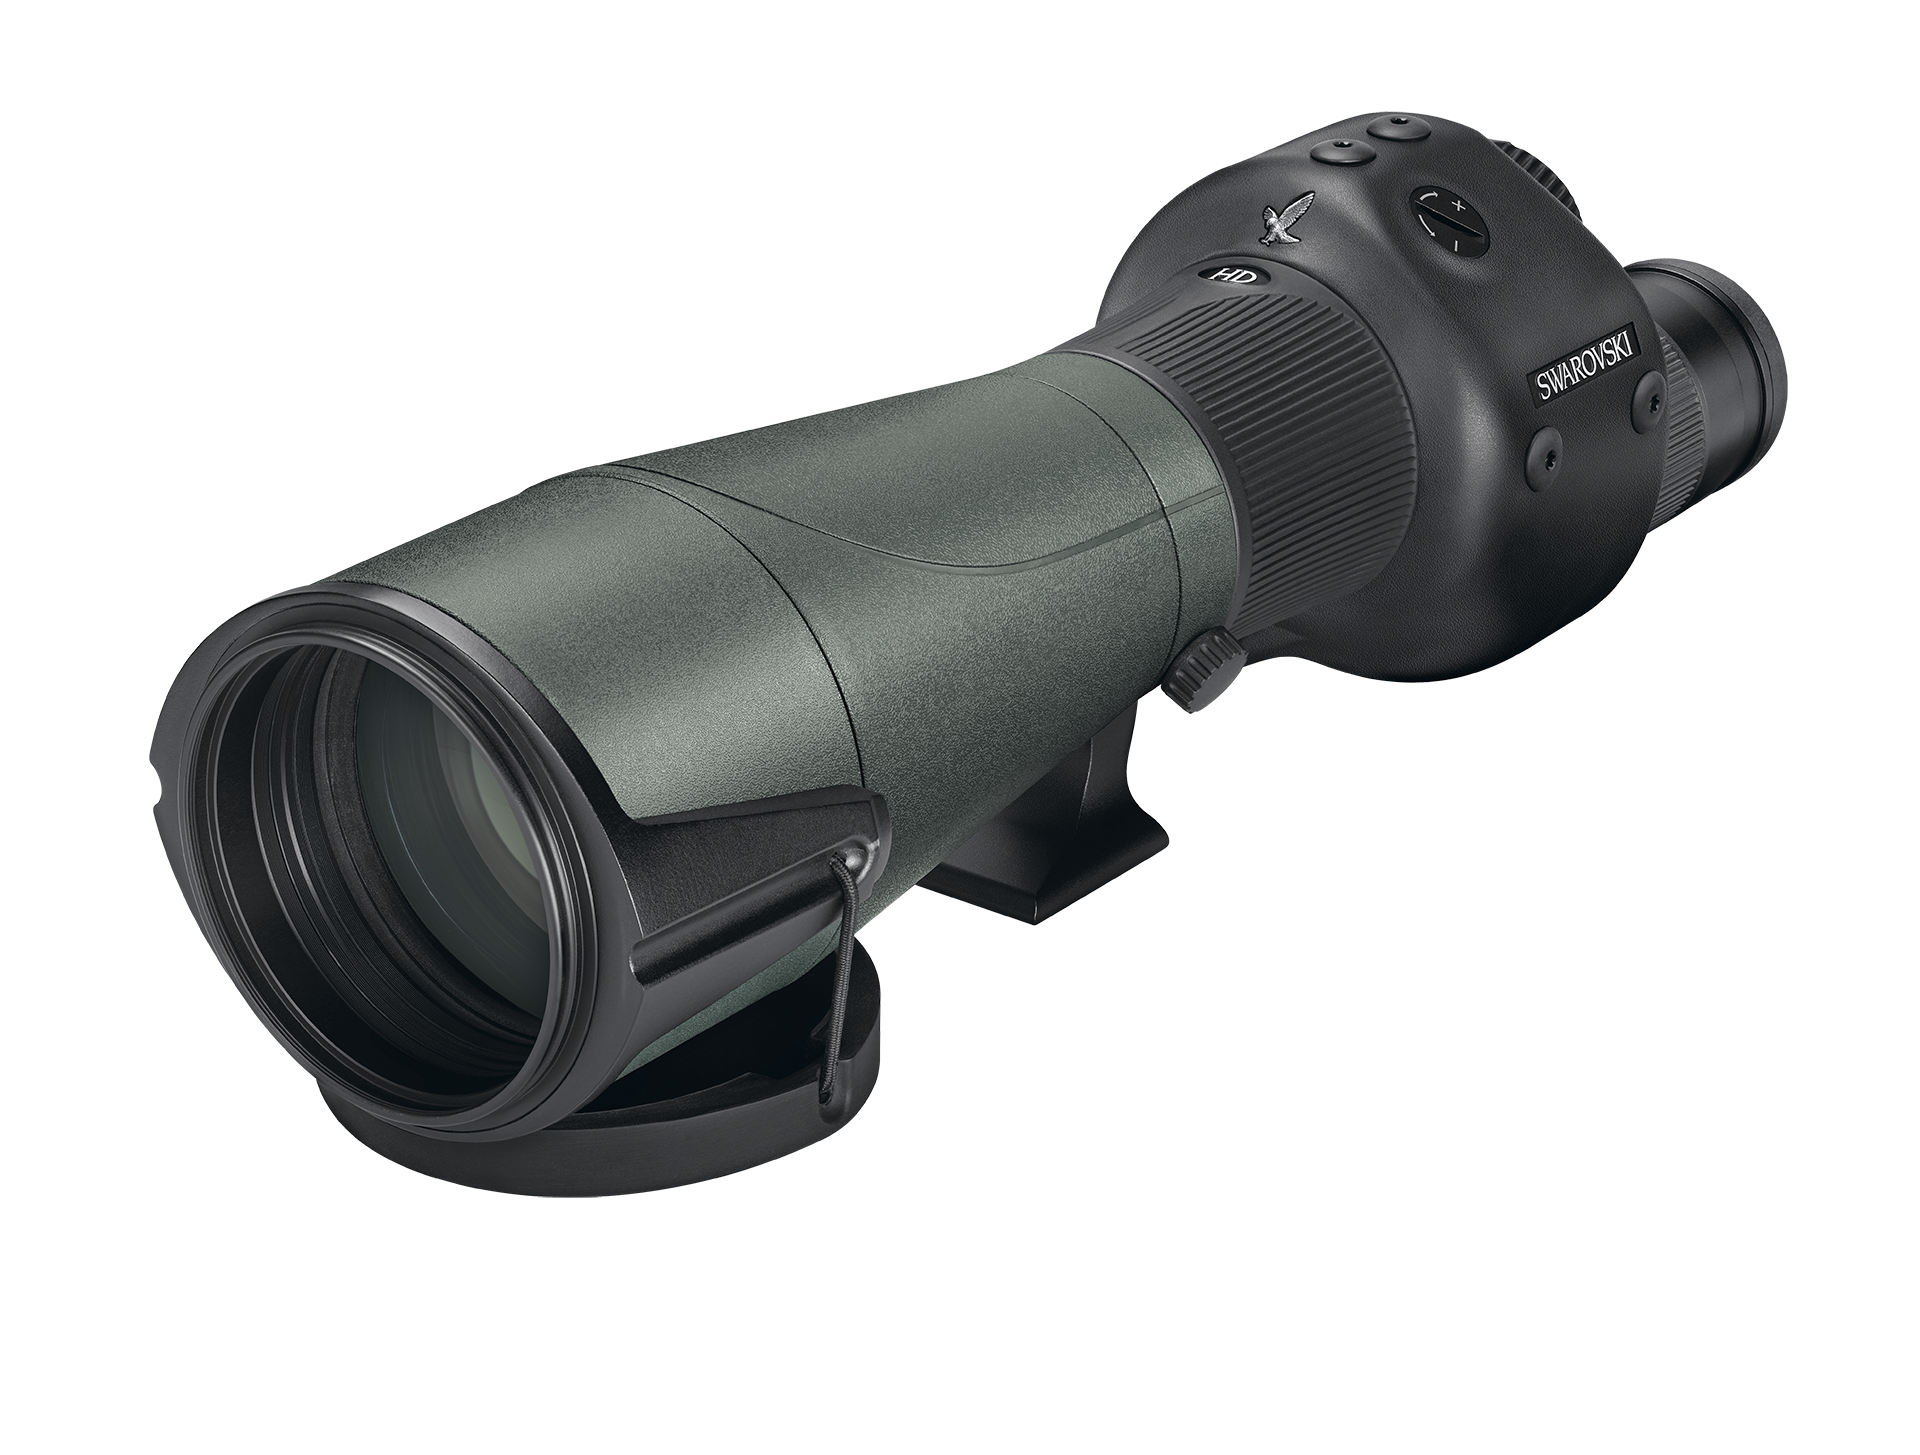 Spotting scopes STR 80